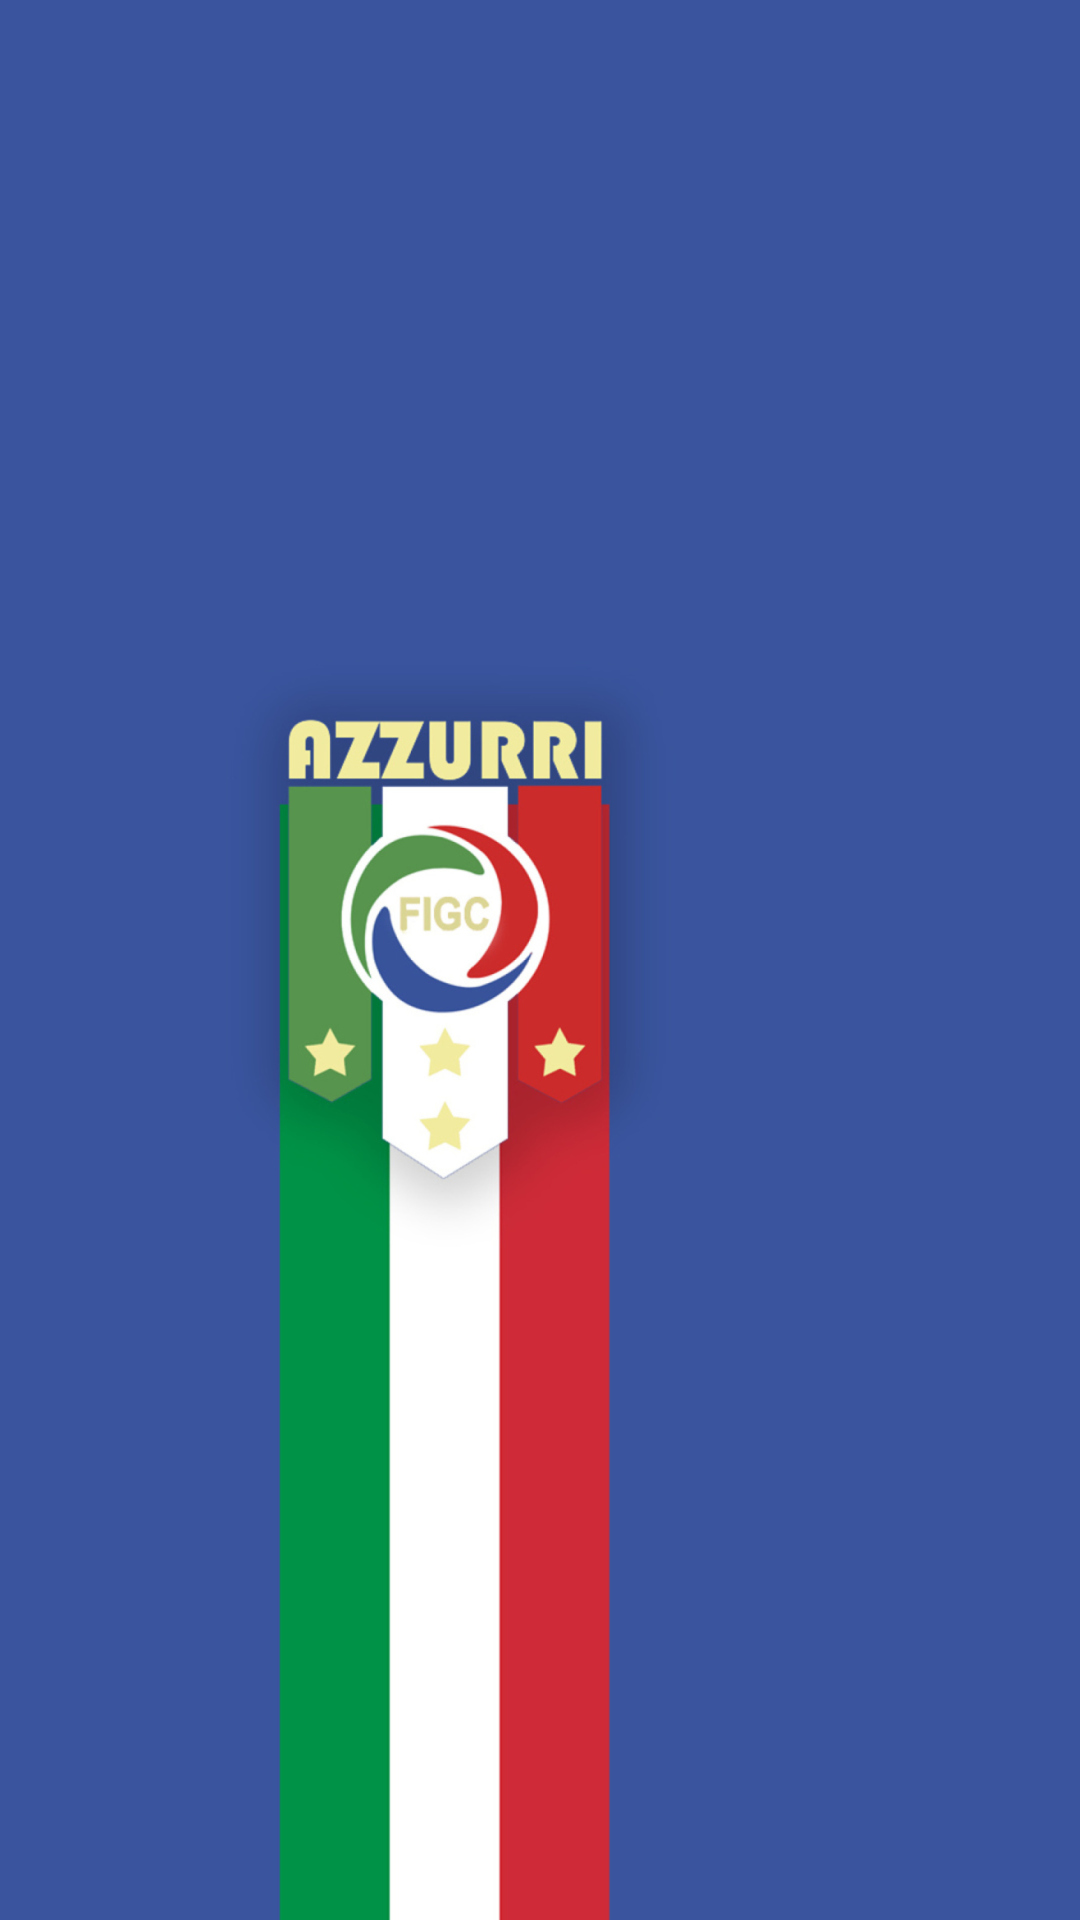 Azzurri - Italy National Team wallpaper 1080x1920